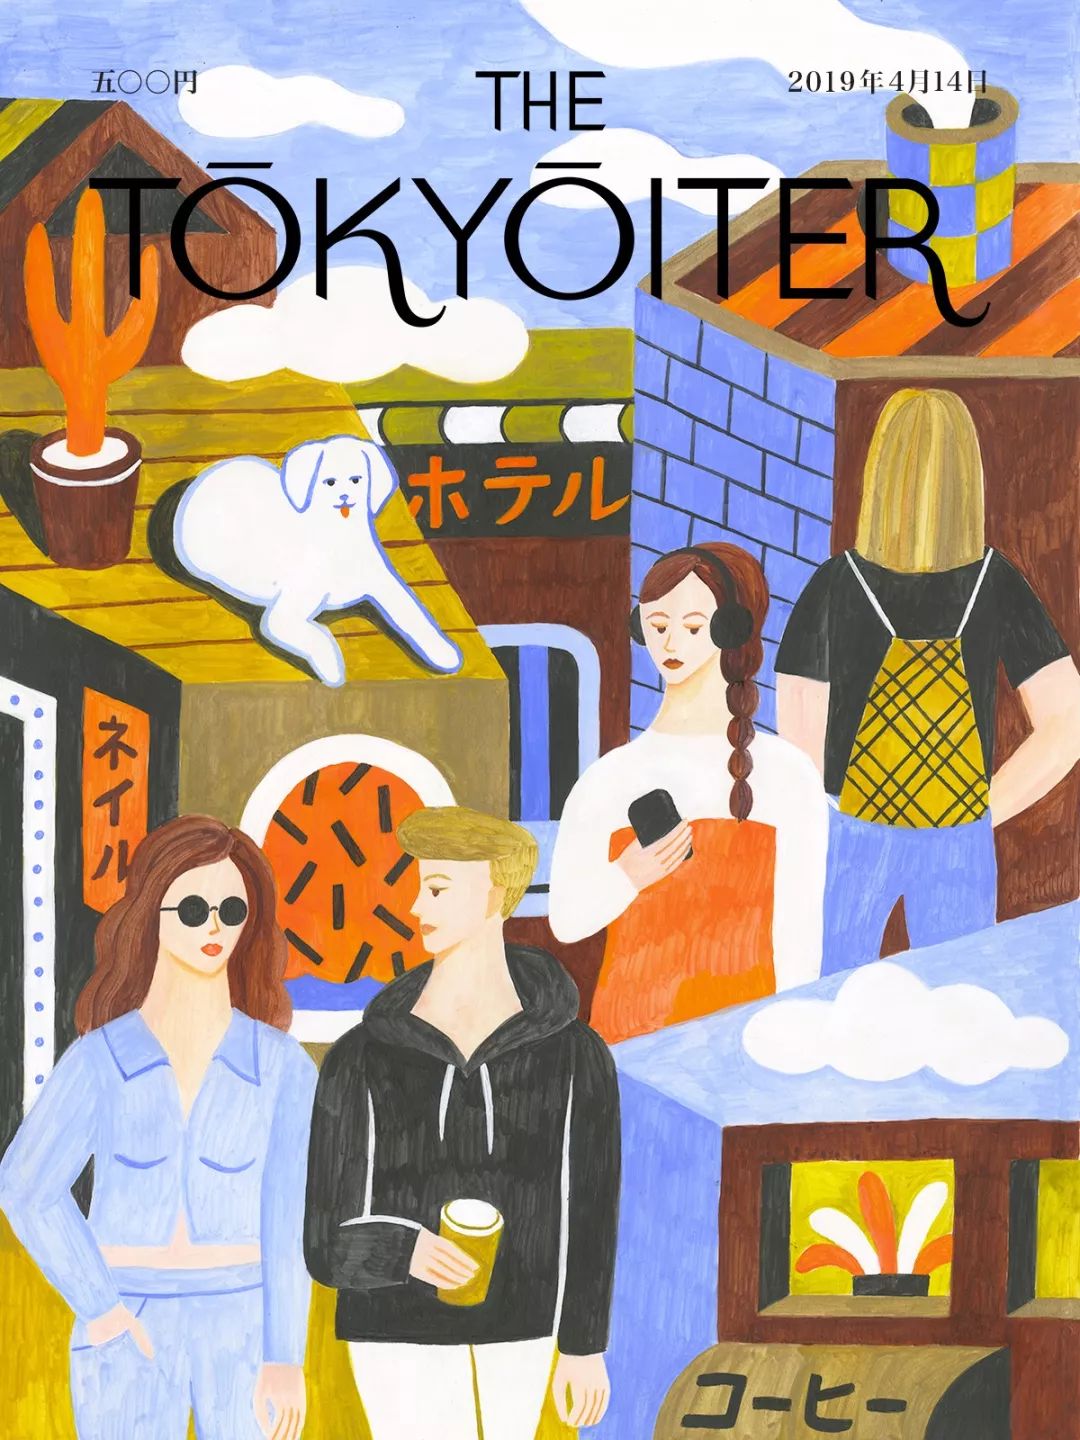 《Tokyoiter》在线“虚拟”杂志封面设计